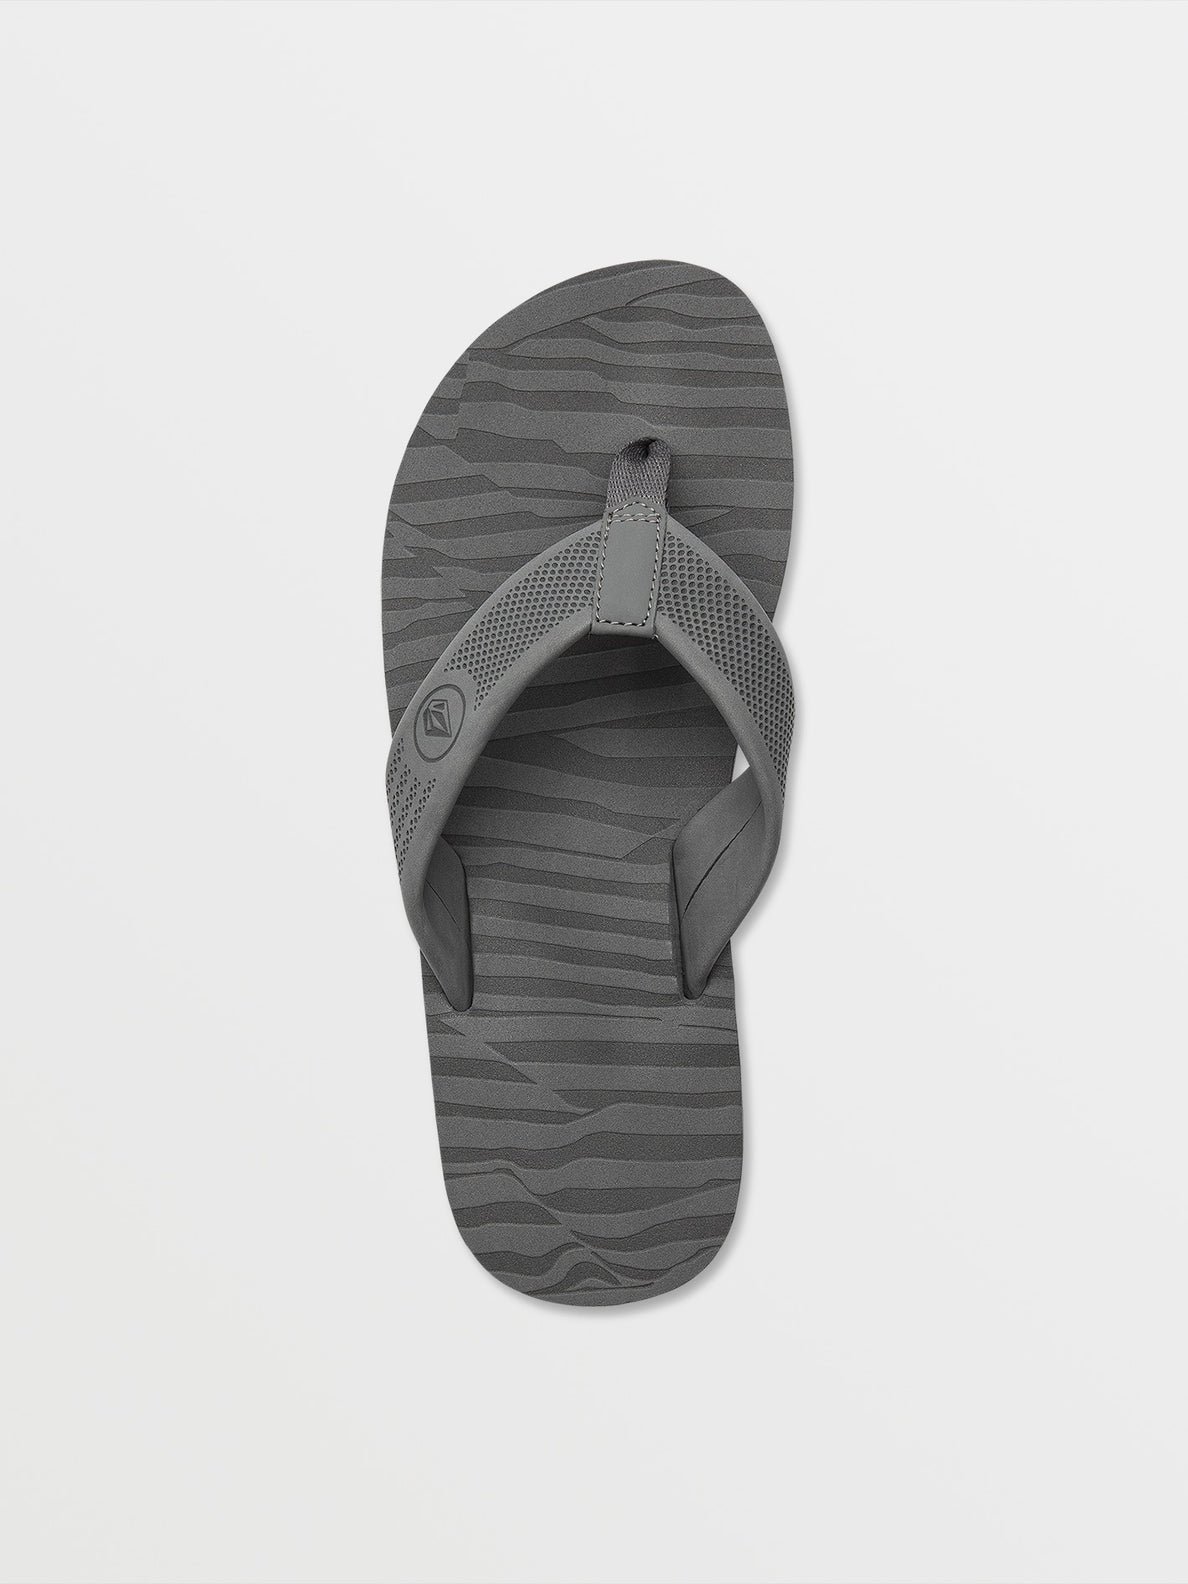 Daycation Sandals - Black Top